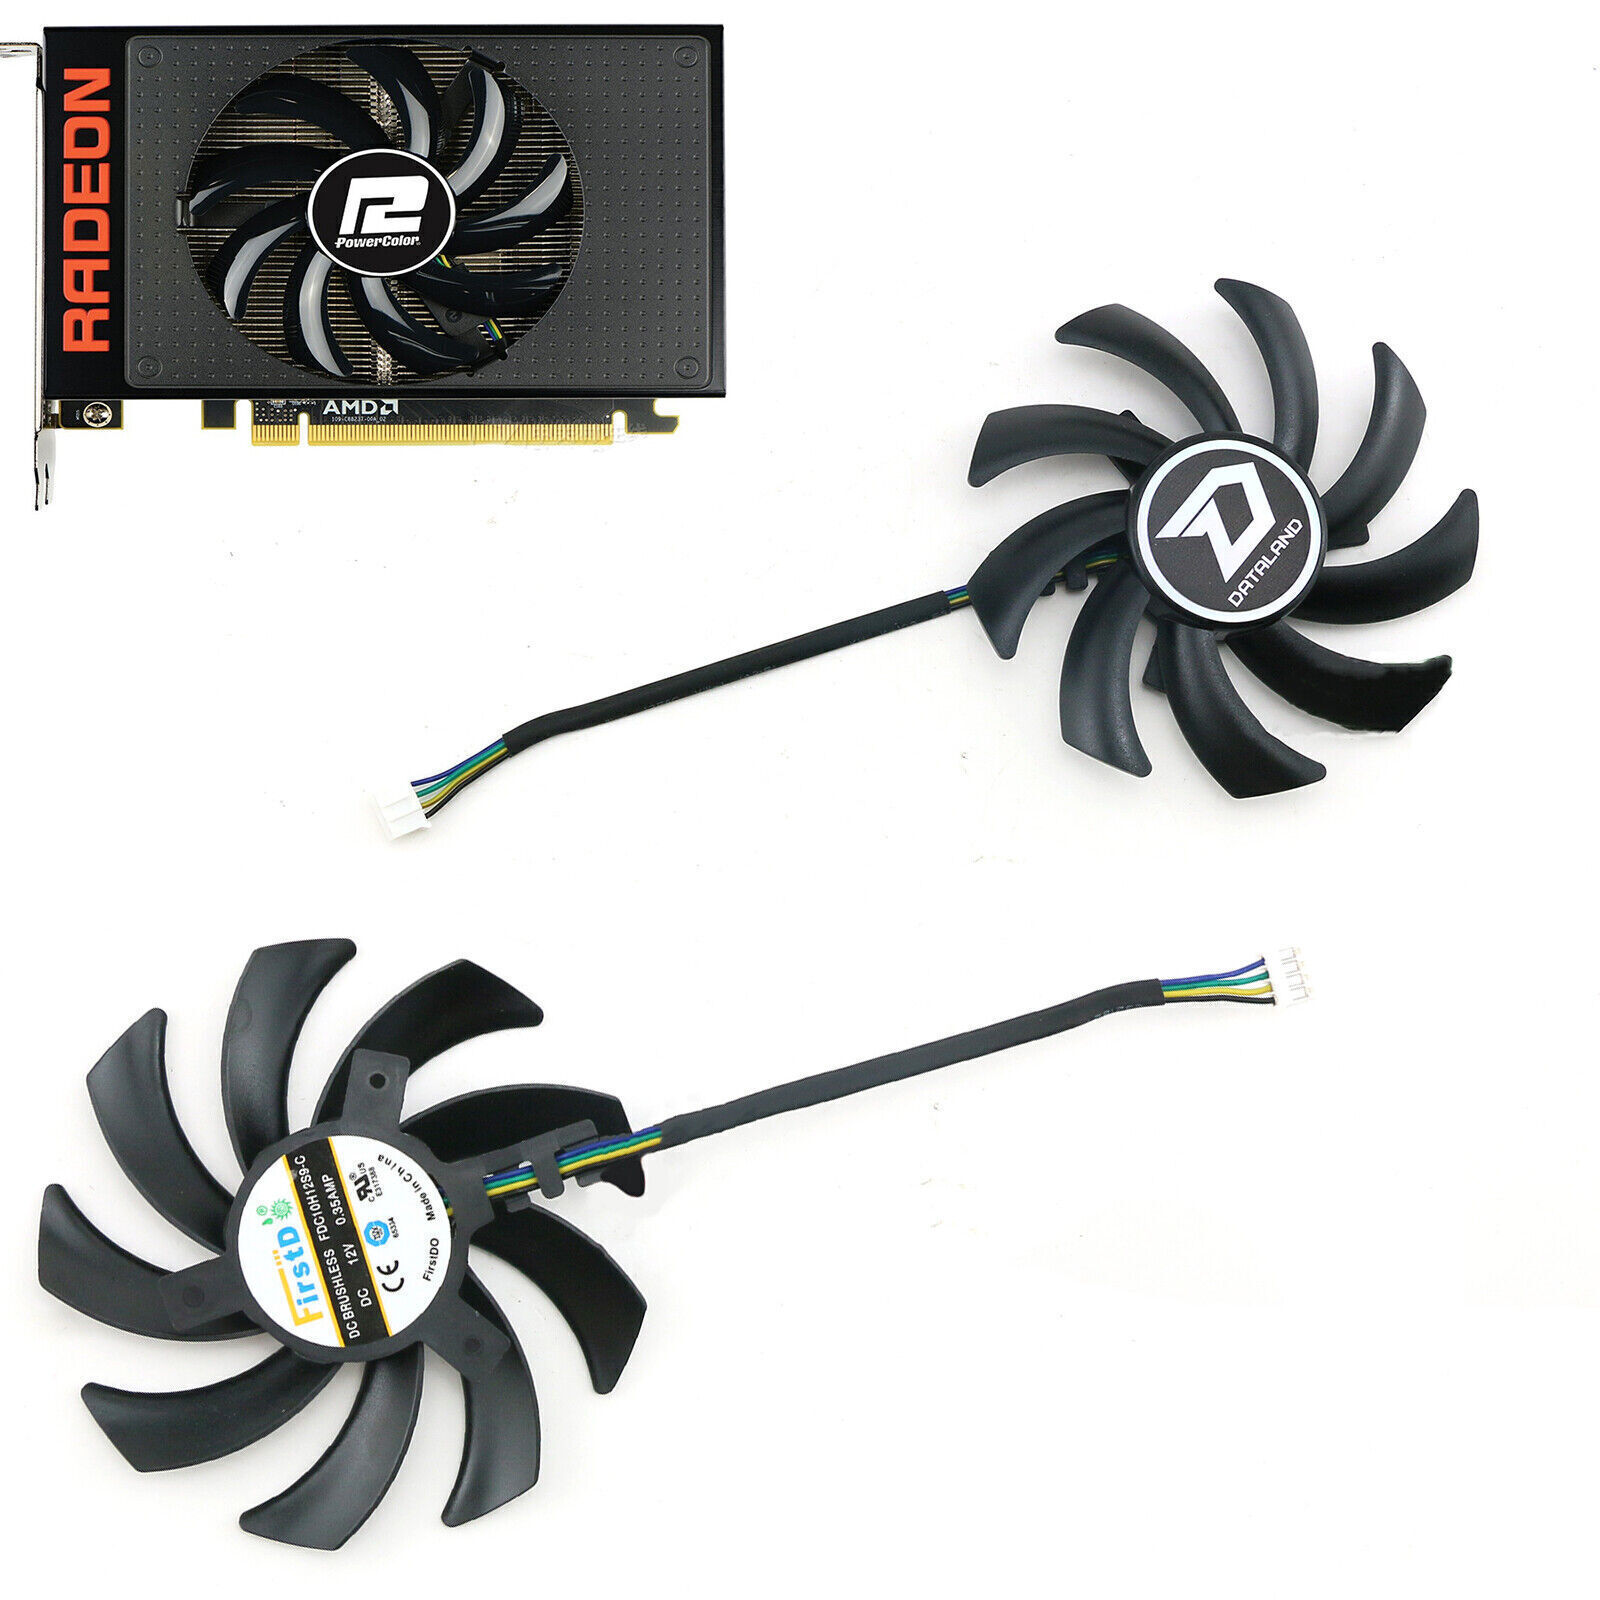 FDC10H12D9-C Graphics Card Cooling Fan for AMD/Dylan/ASUS R9 Nano 4G HBM Cooler